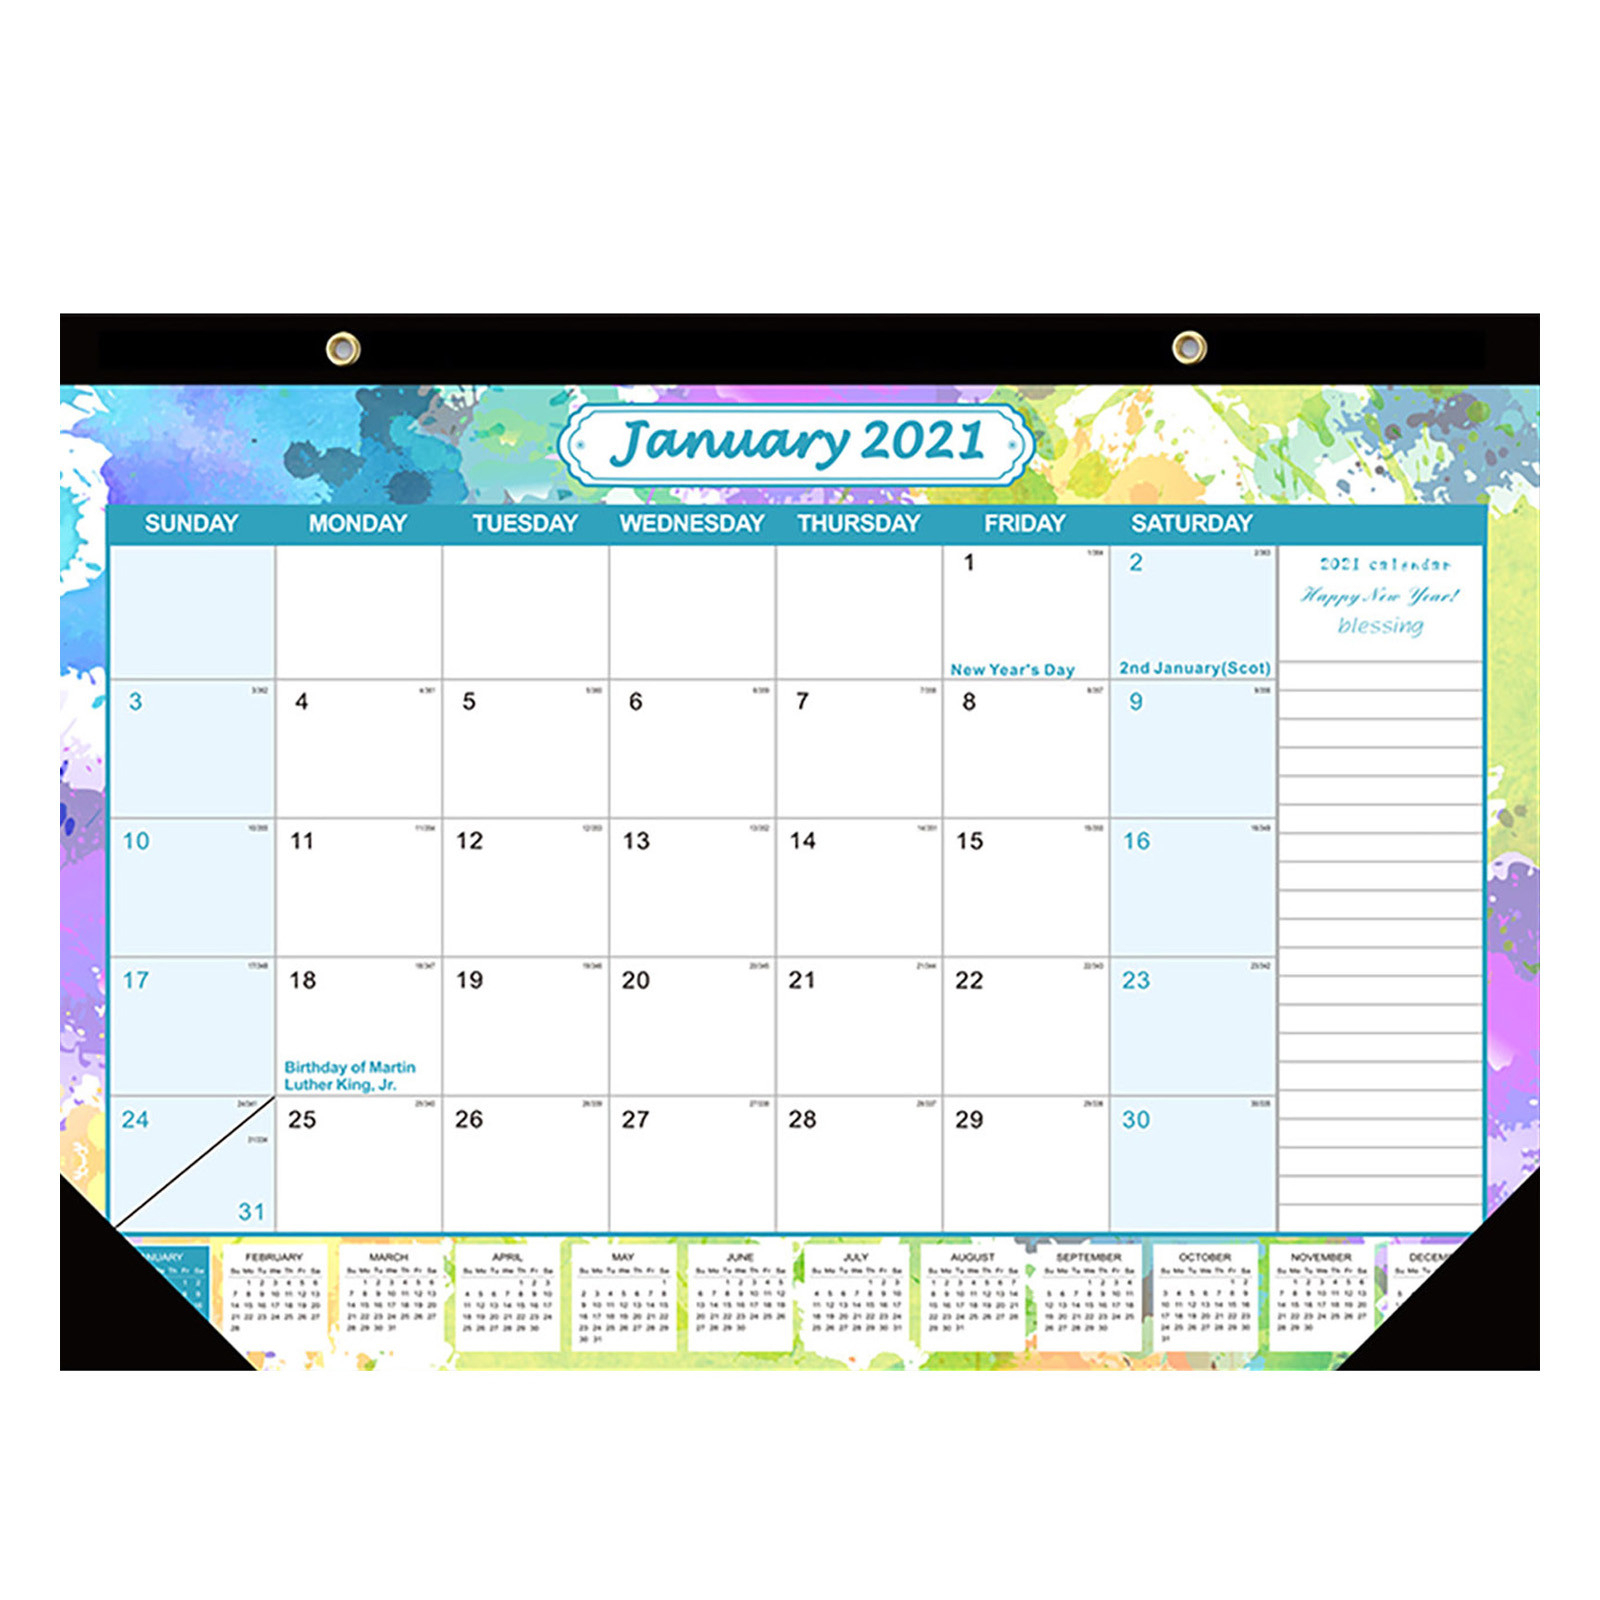 Julian Date Code Calendar 2021 | Example Calendar Printable throughout Julian Date Calendar 2021